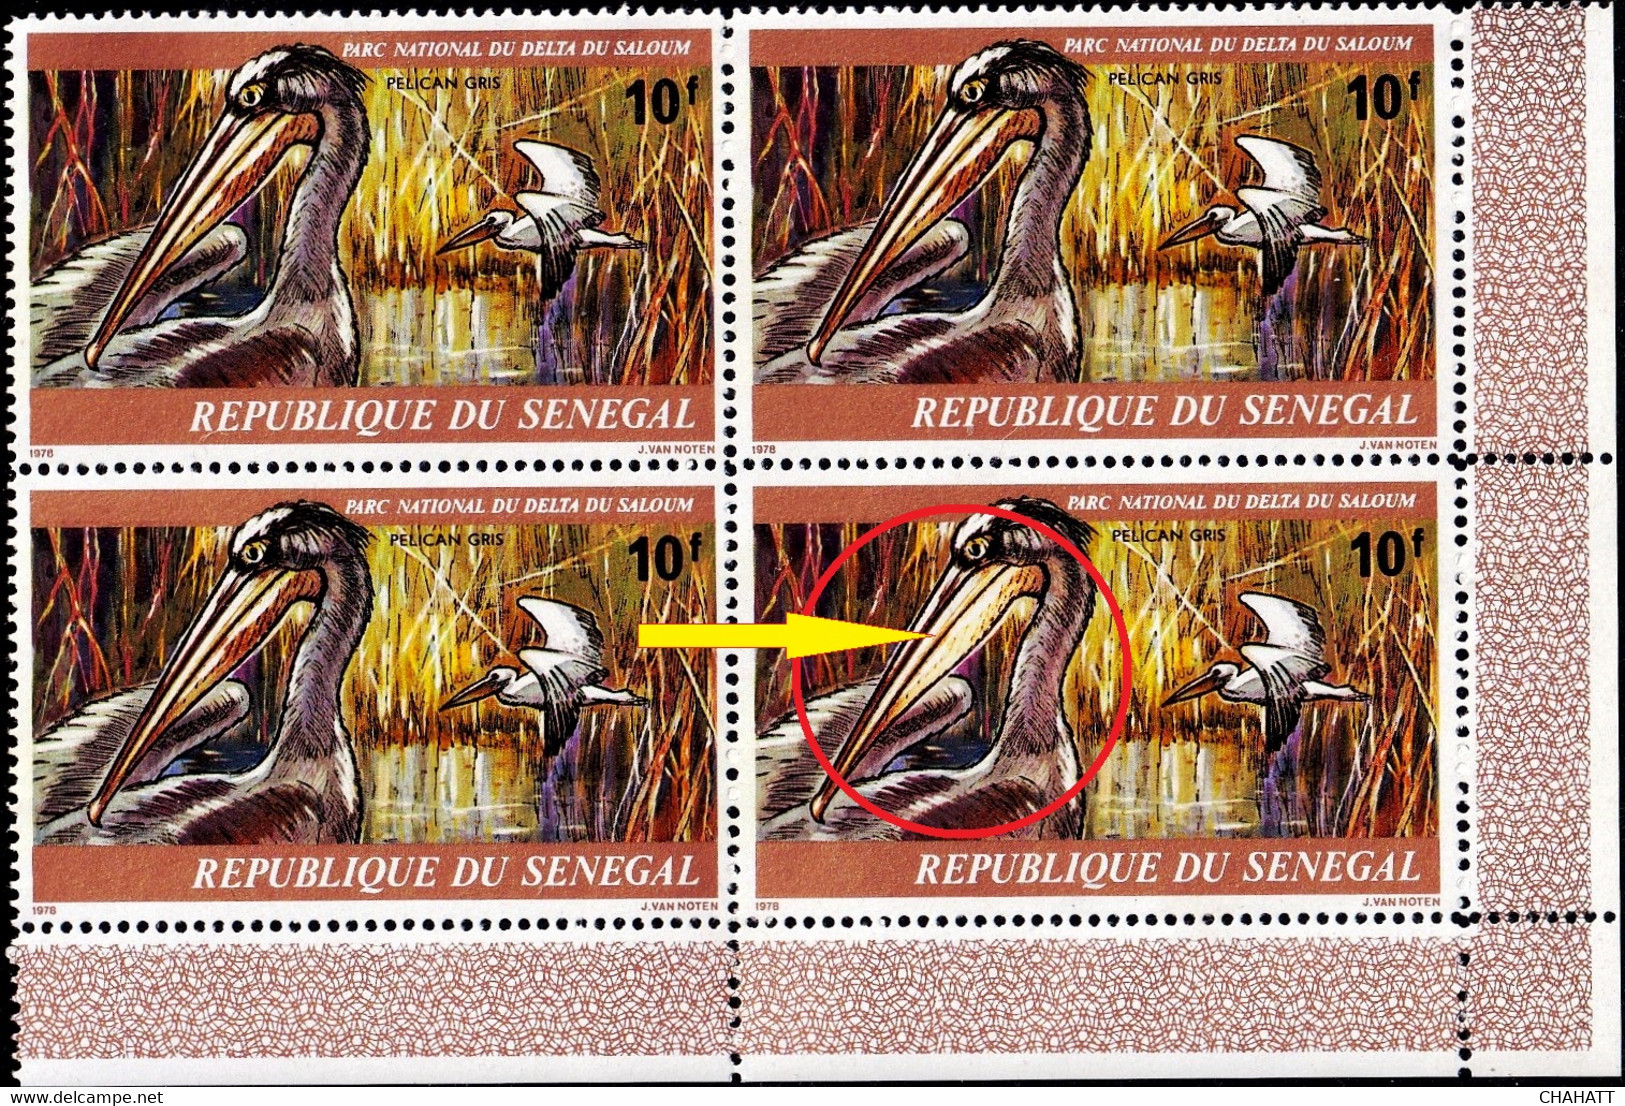 MARINE WEBBED FEET BIRDS- PELICANS- COLOR VARIETY- BLOCK OF 4- SENEGAL 1968-MNH-SCARCE-B9-2040 - Pelicans